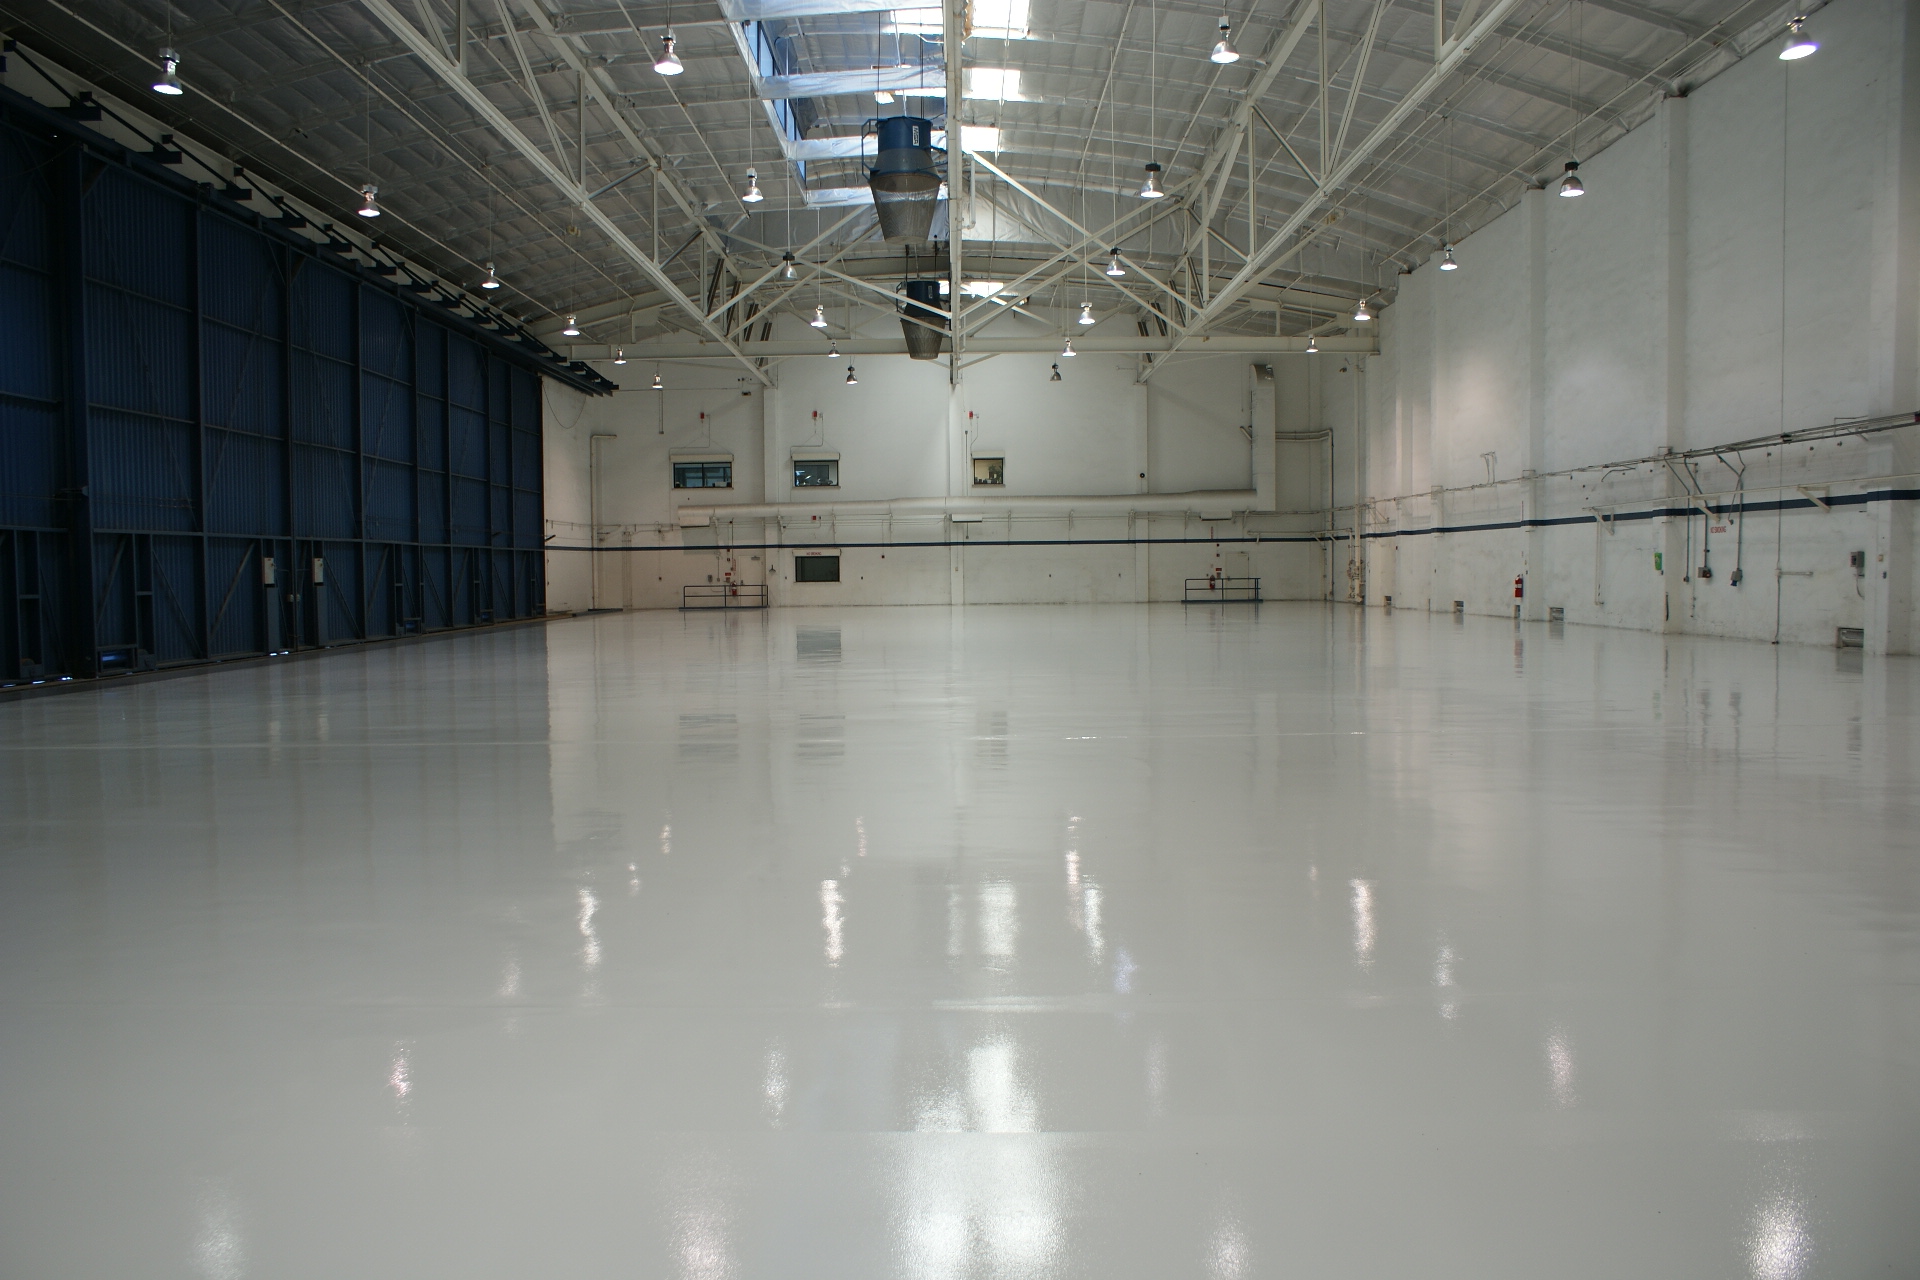 Industrial Commercial Flooring 48